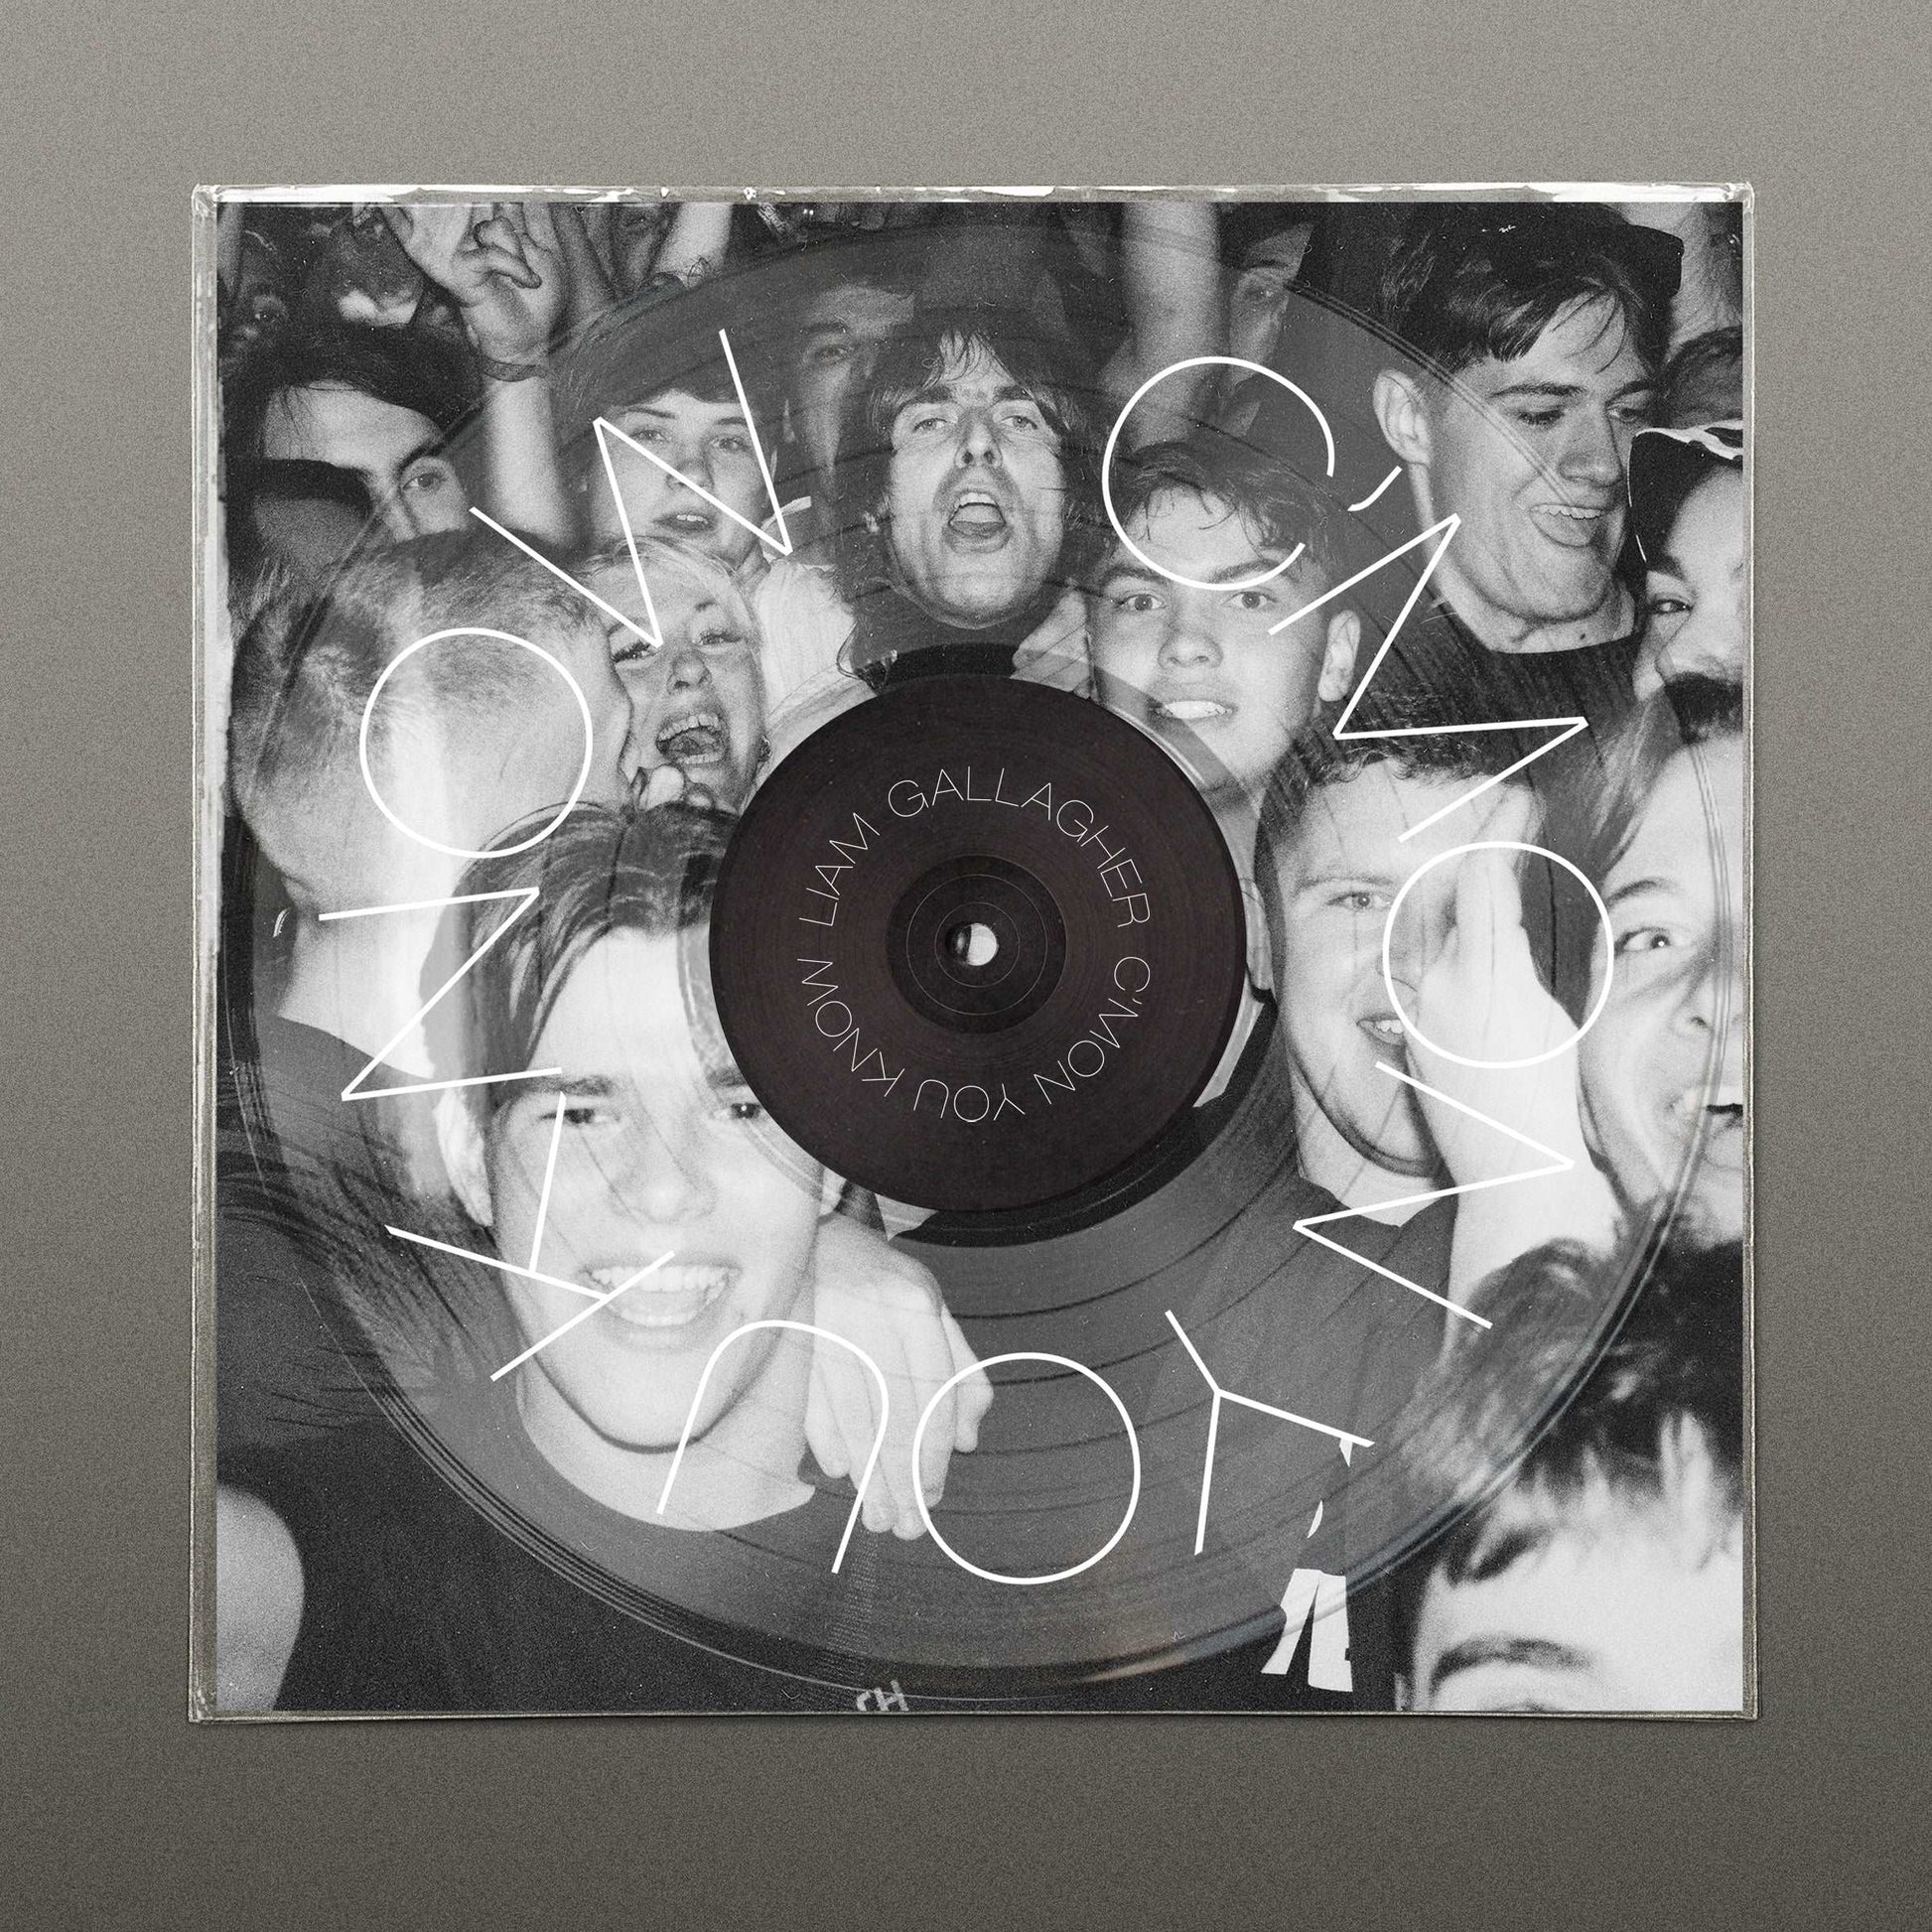 Liam Gallagher - C'Mon You Know - The Vault Collective ltd